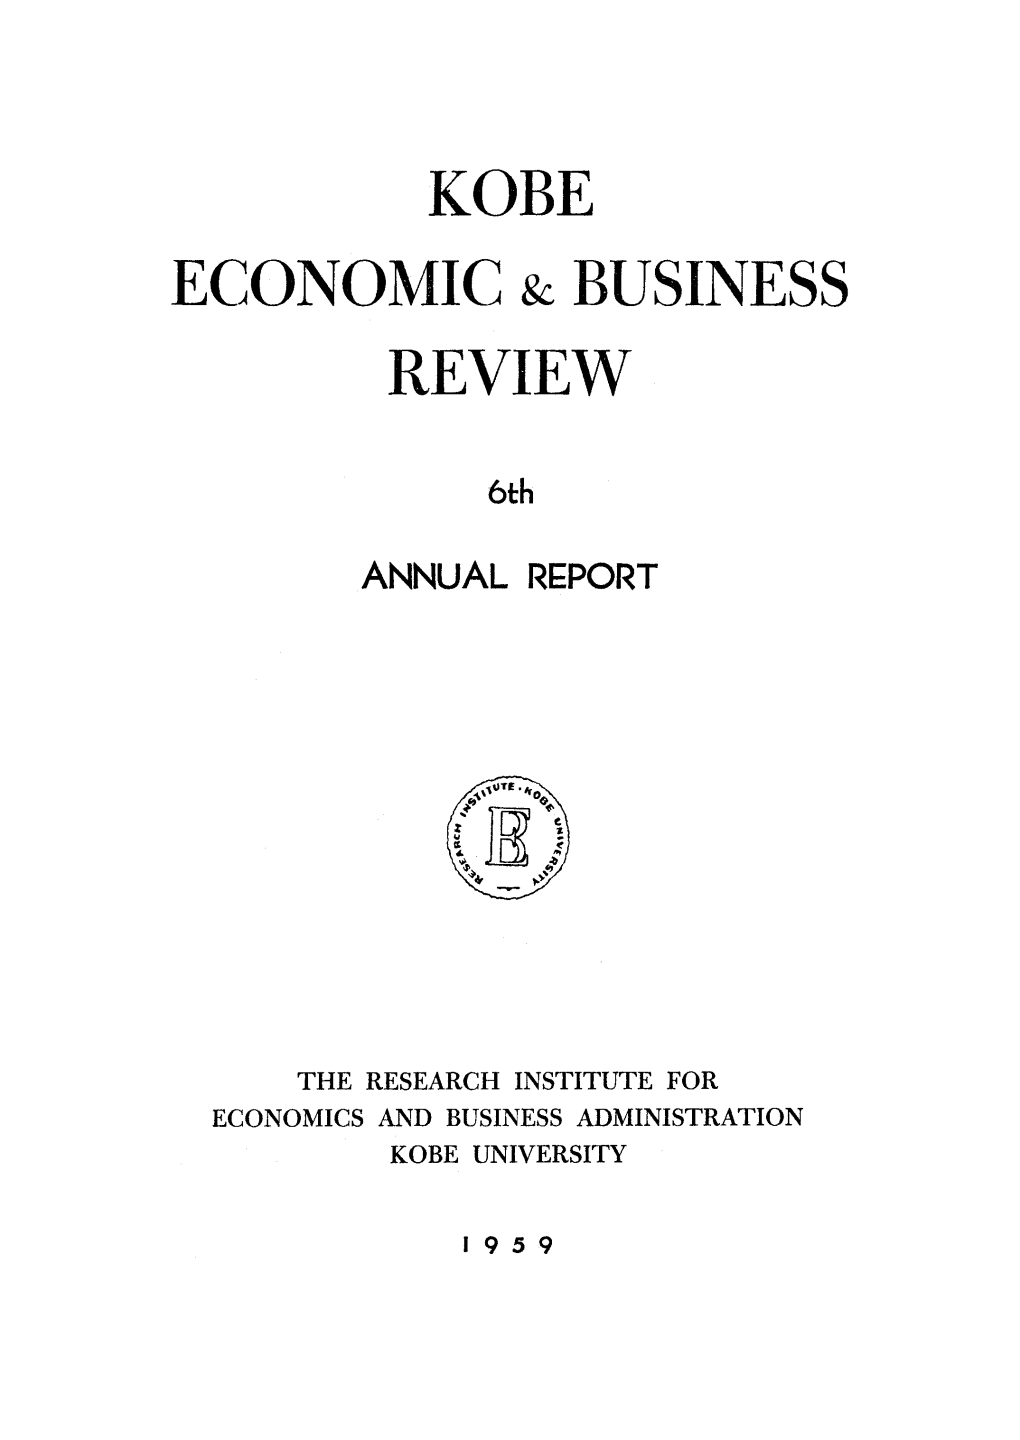 KOBE ECONOMIC & BUSINESS REVIEW No.6